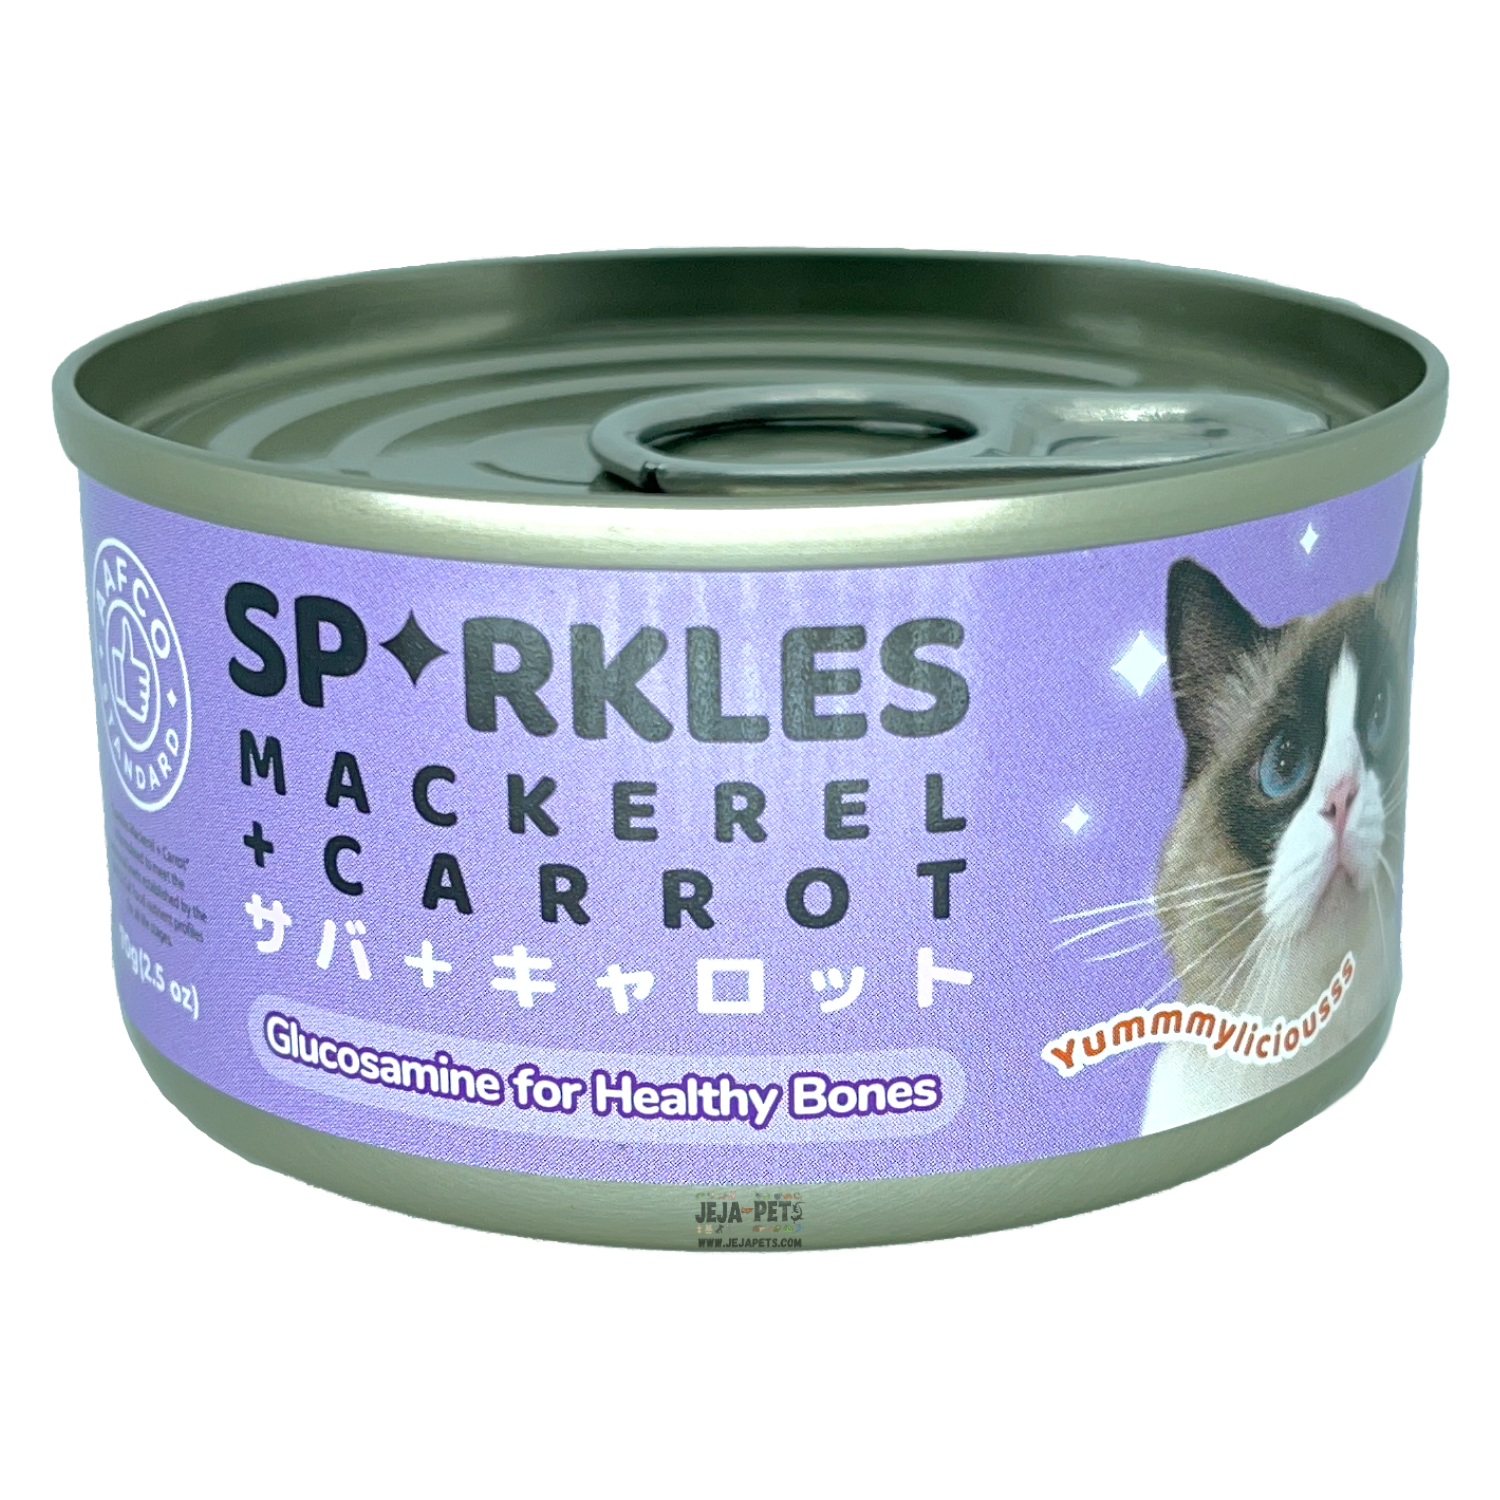 Sparkles Mackerel and Carrot (Healthy Bones) - 70g